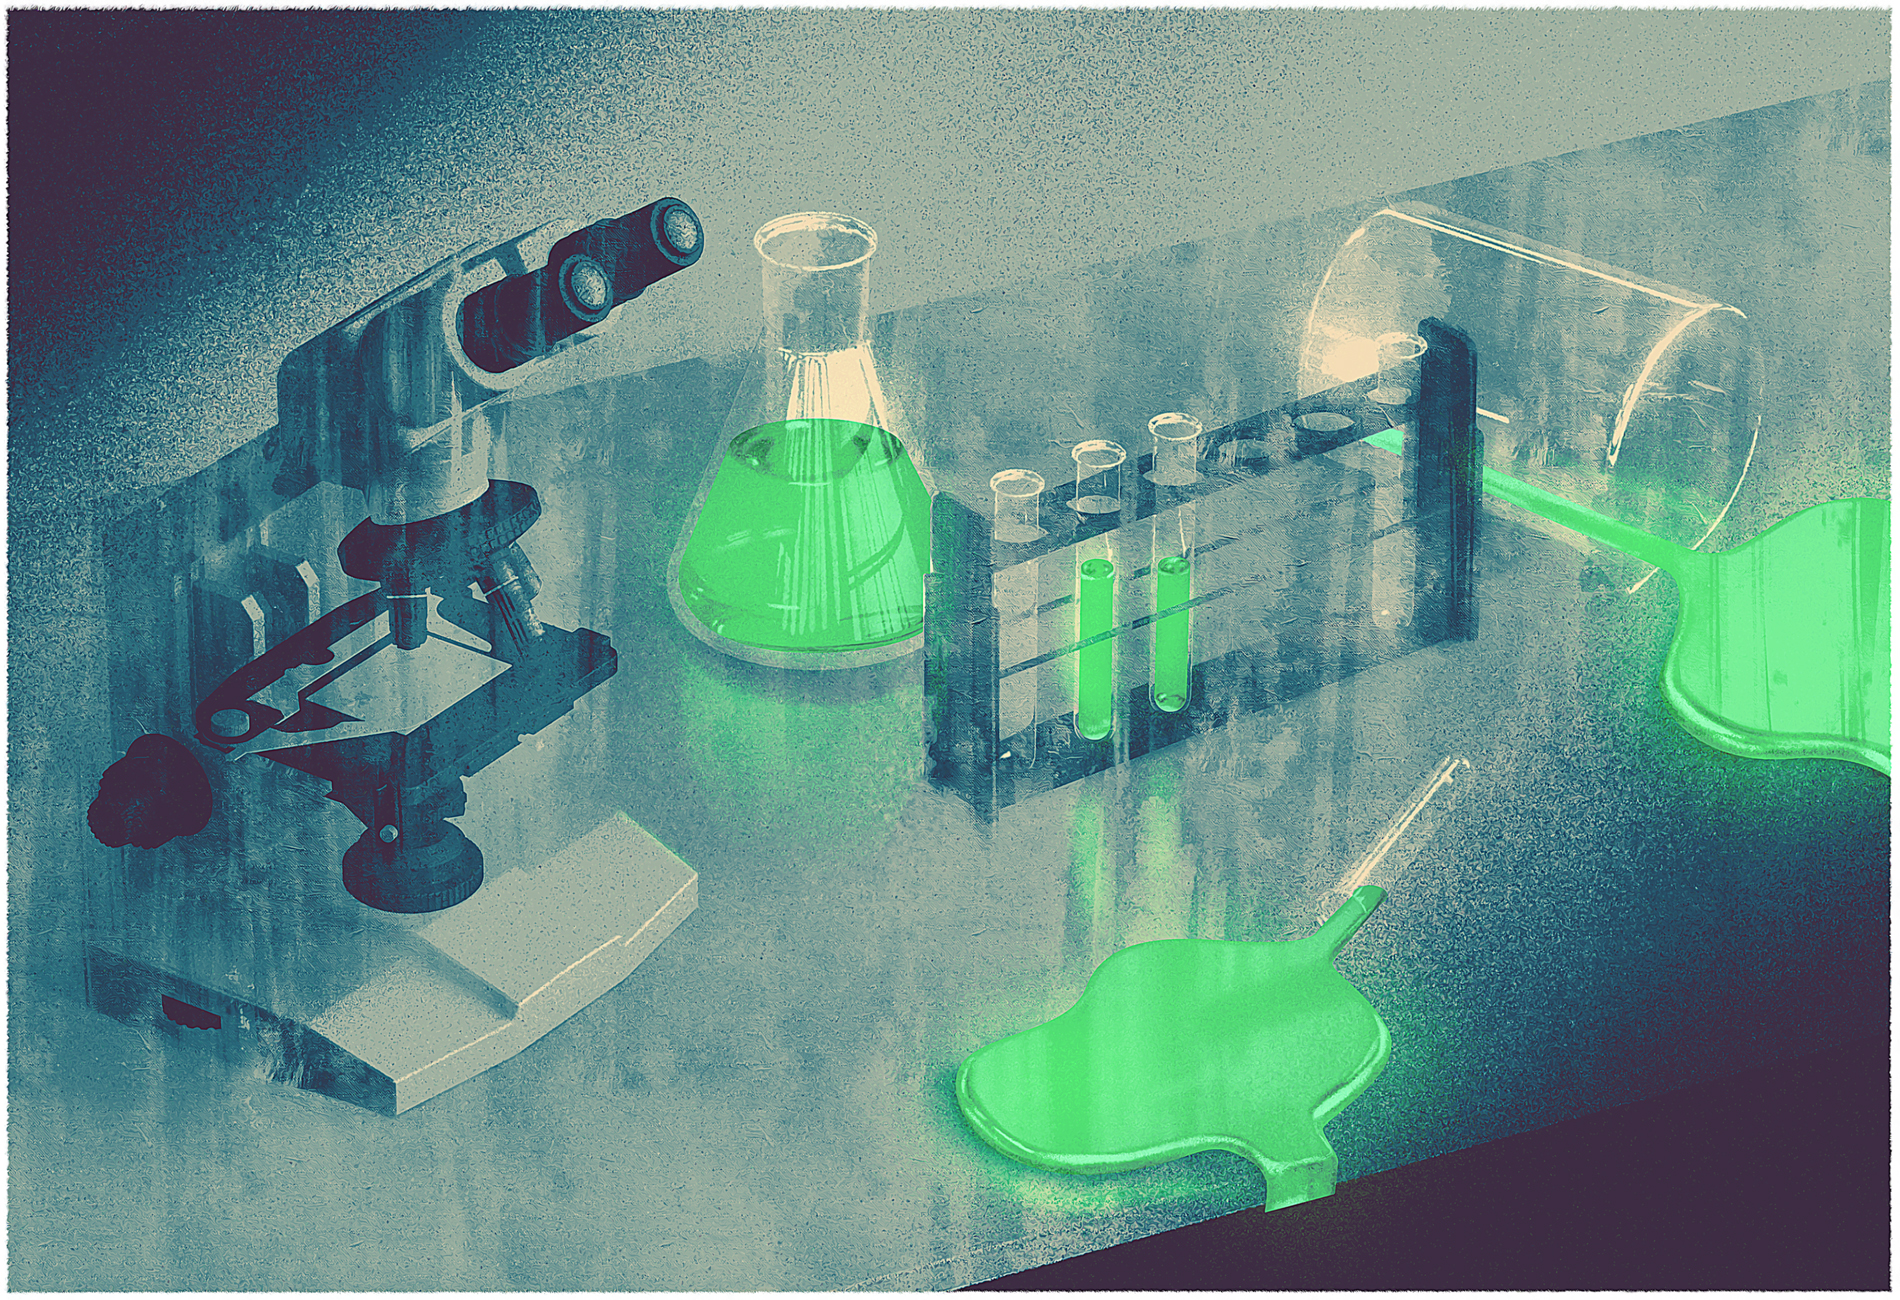 Lab scene with glowing liquid in vials